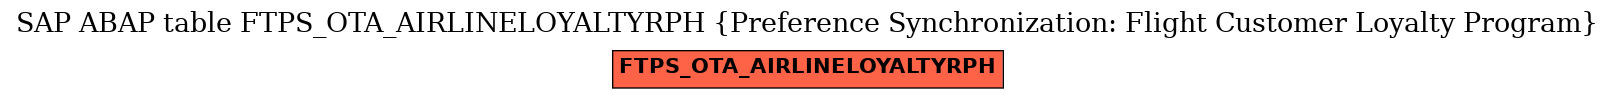 E-R Diagram for table FTPS_OTA_AIRLINELOYALTYRPH (Preference Synchronization: Flight Customer Loyalty Program)